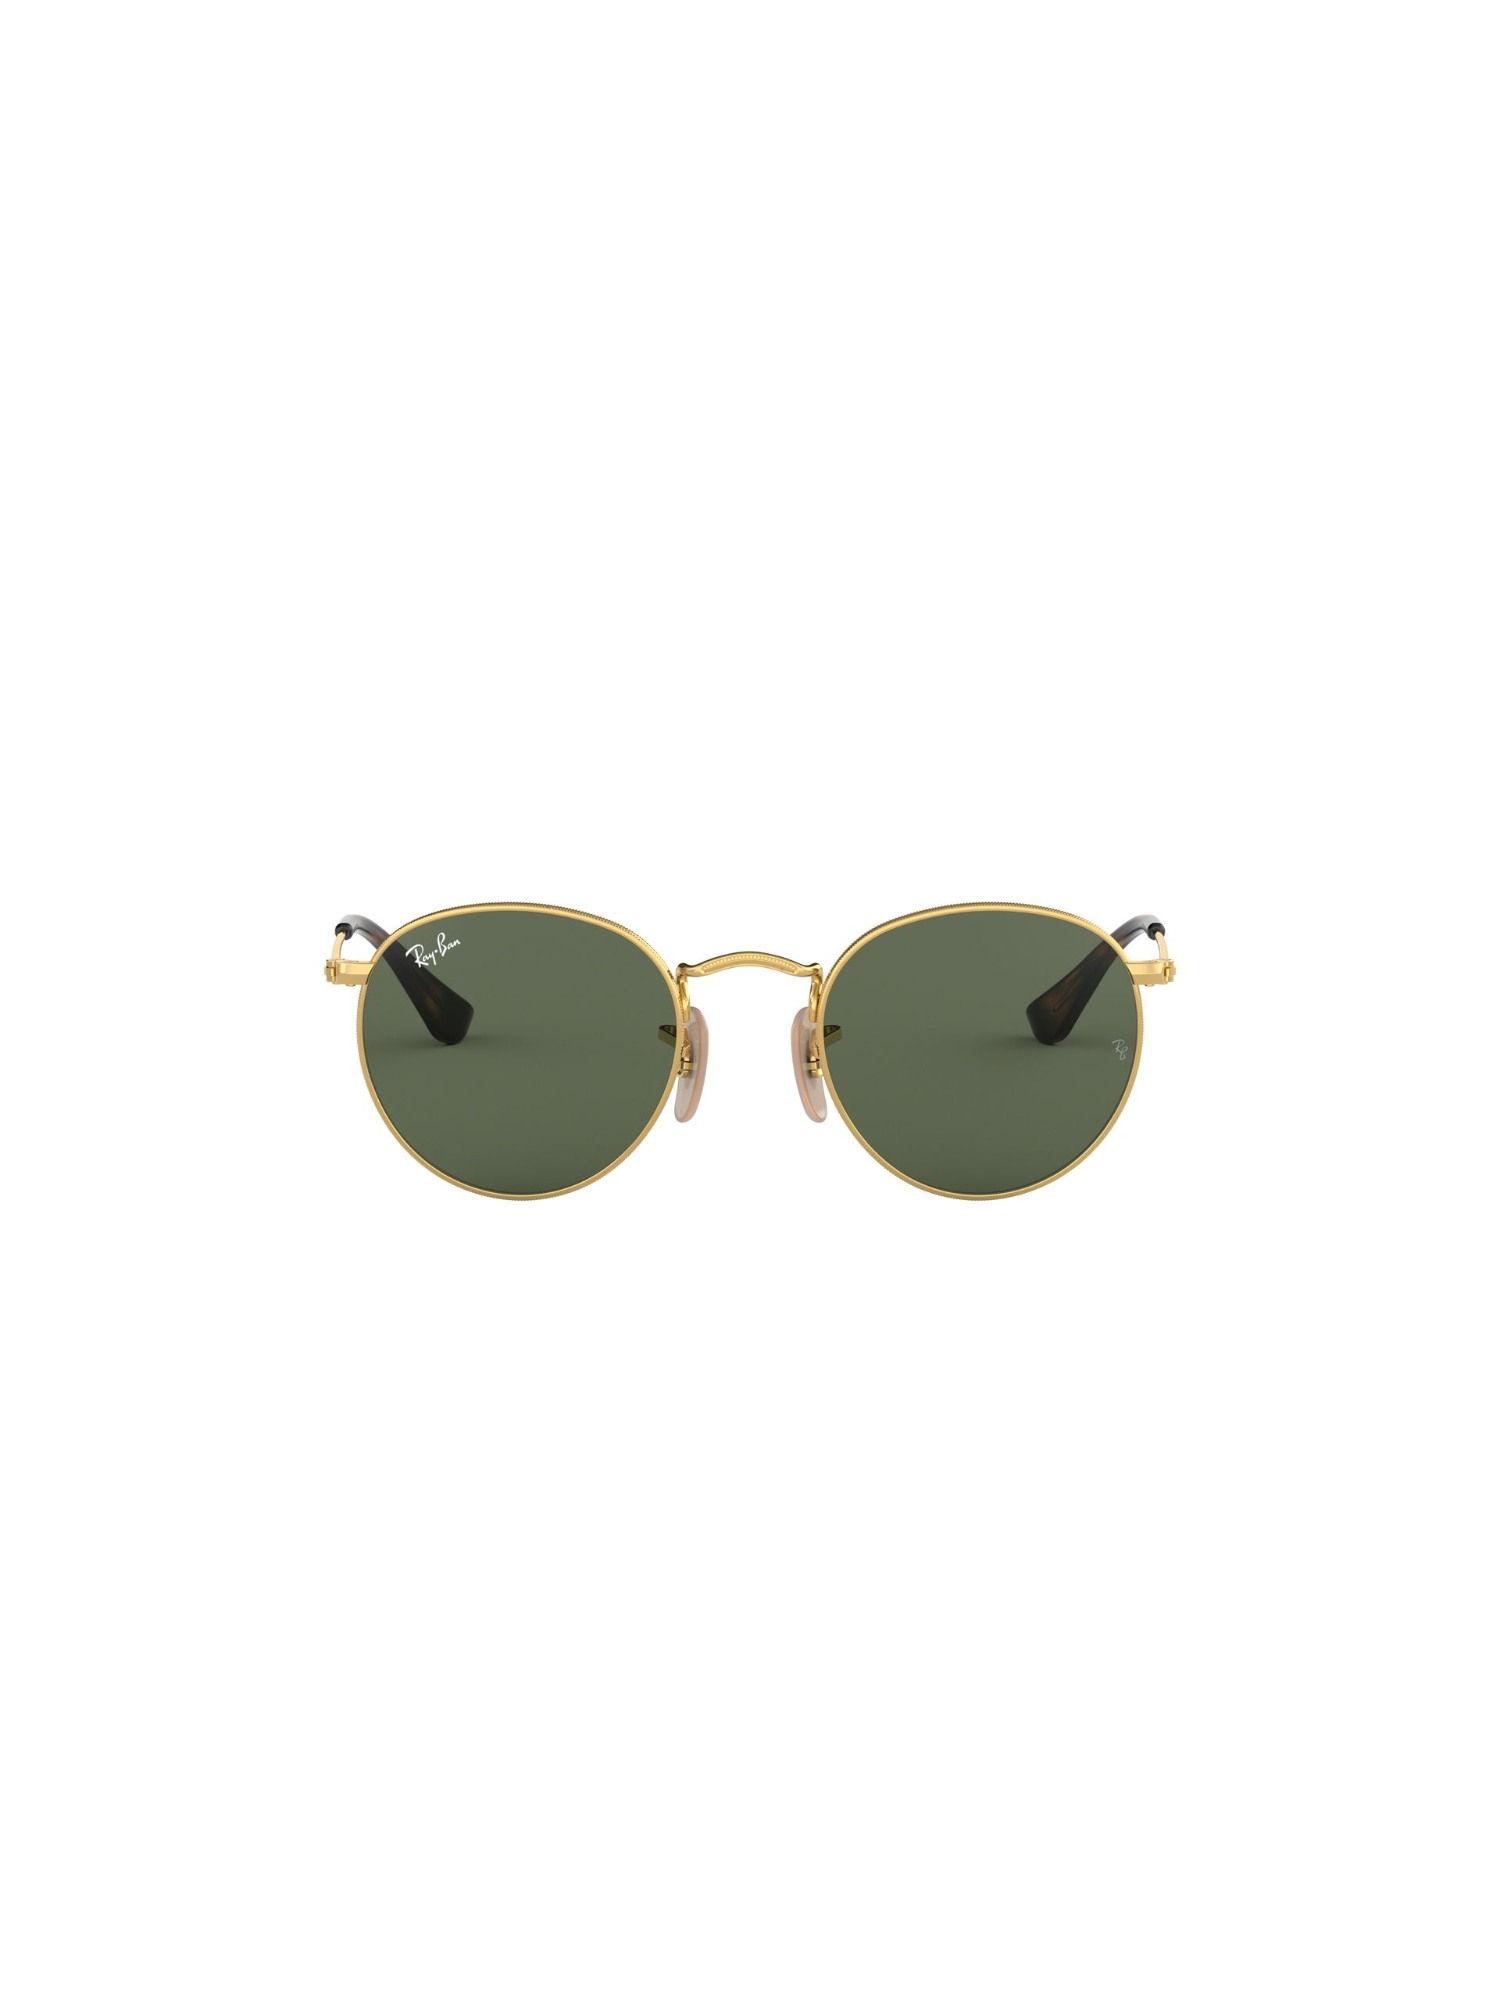 junior sole sunglasses 0rj9547s223-7144- round- gold frame- green lens (44)